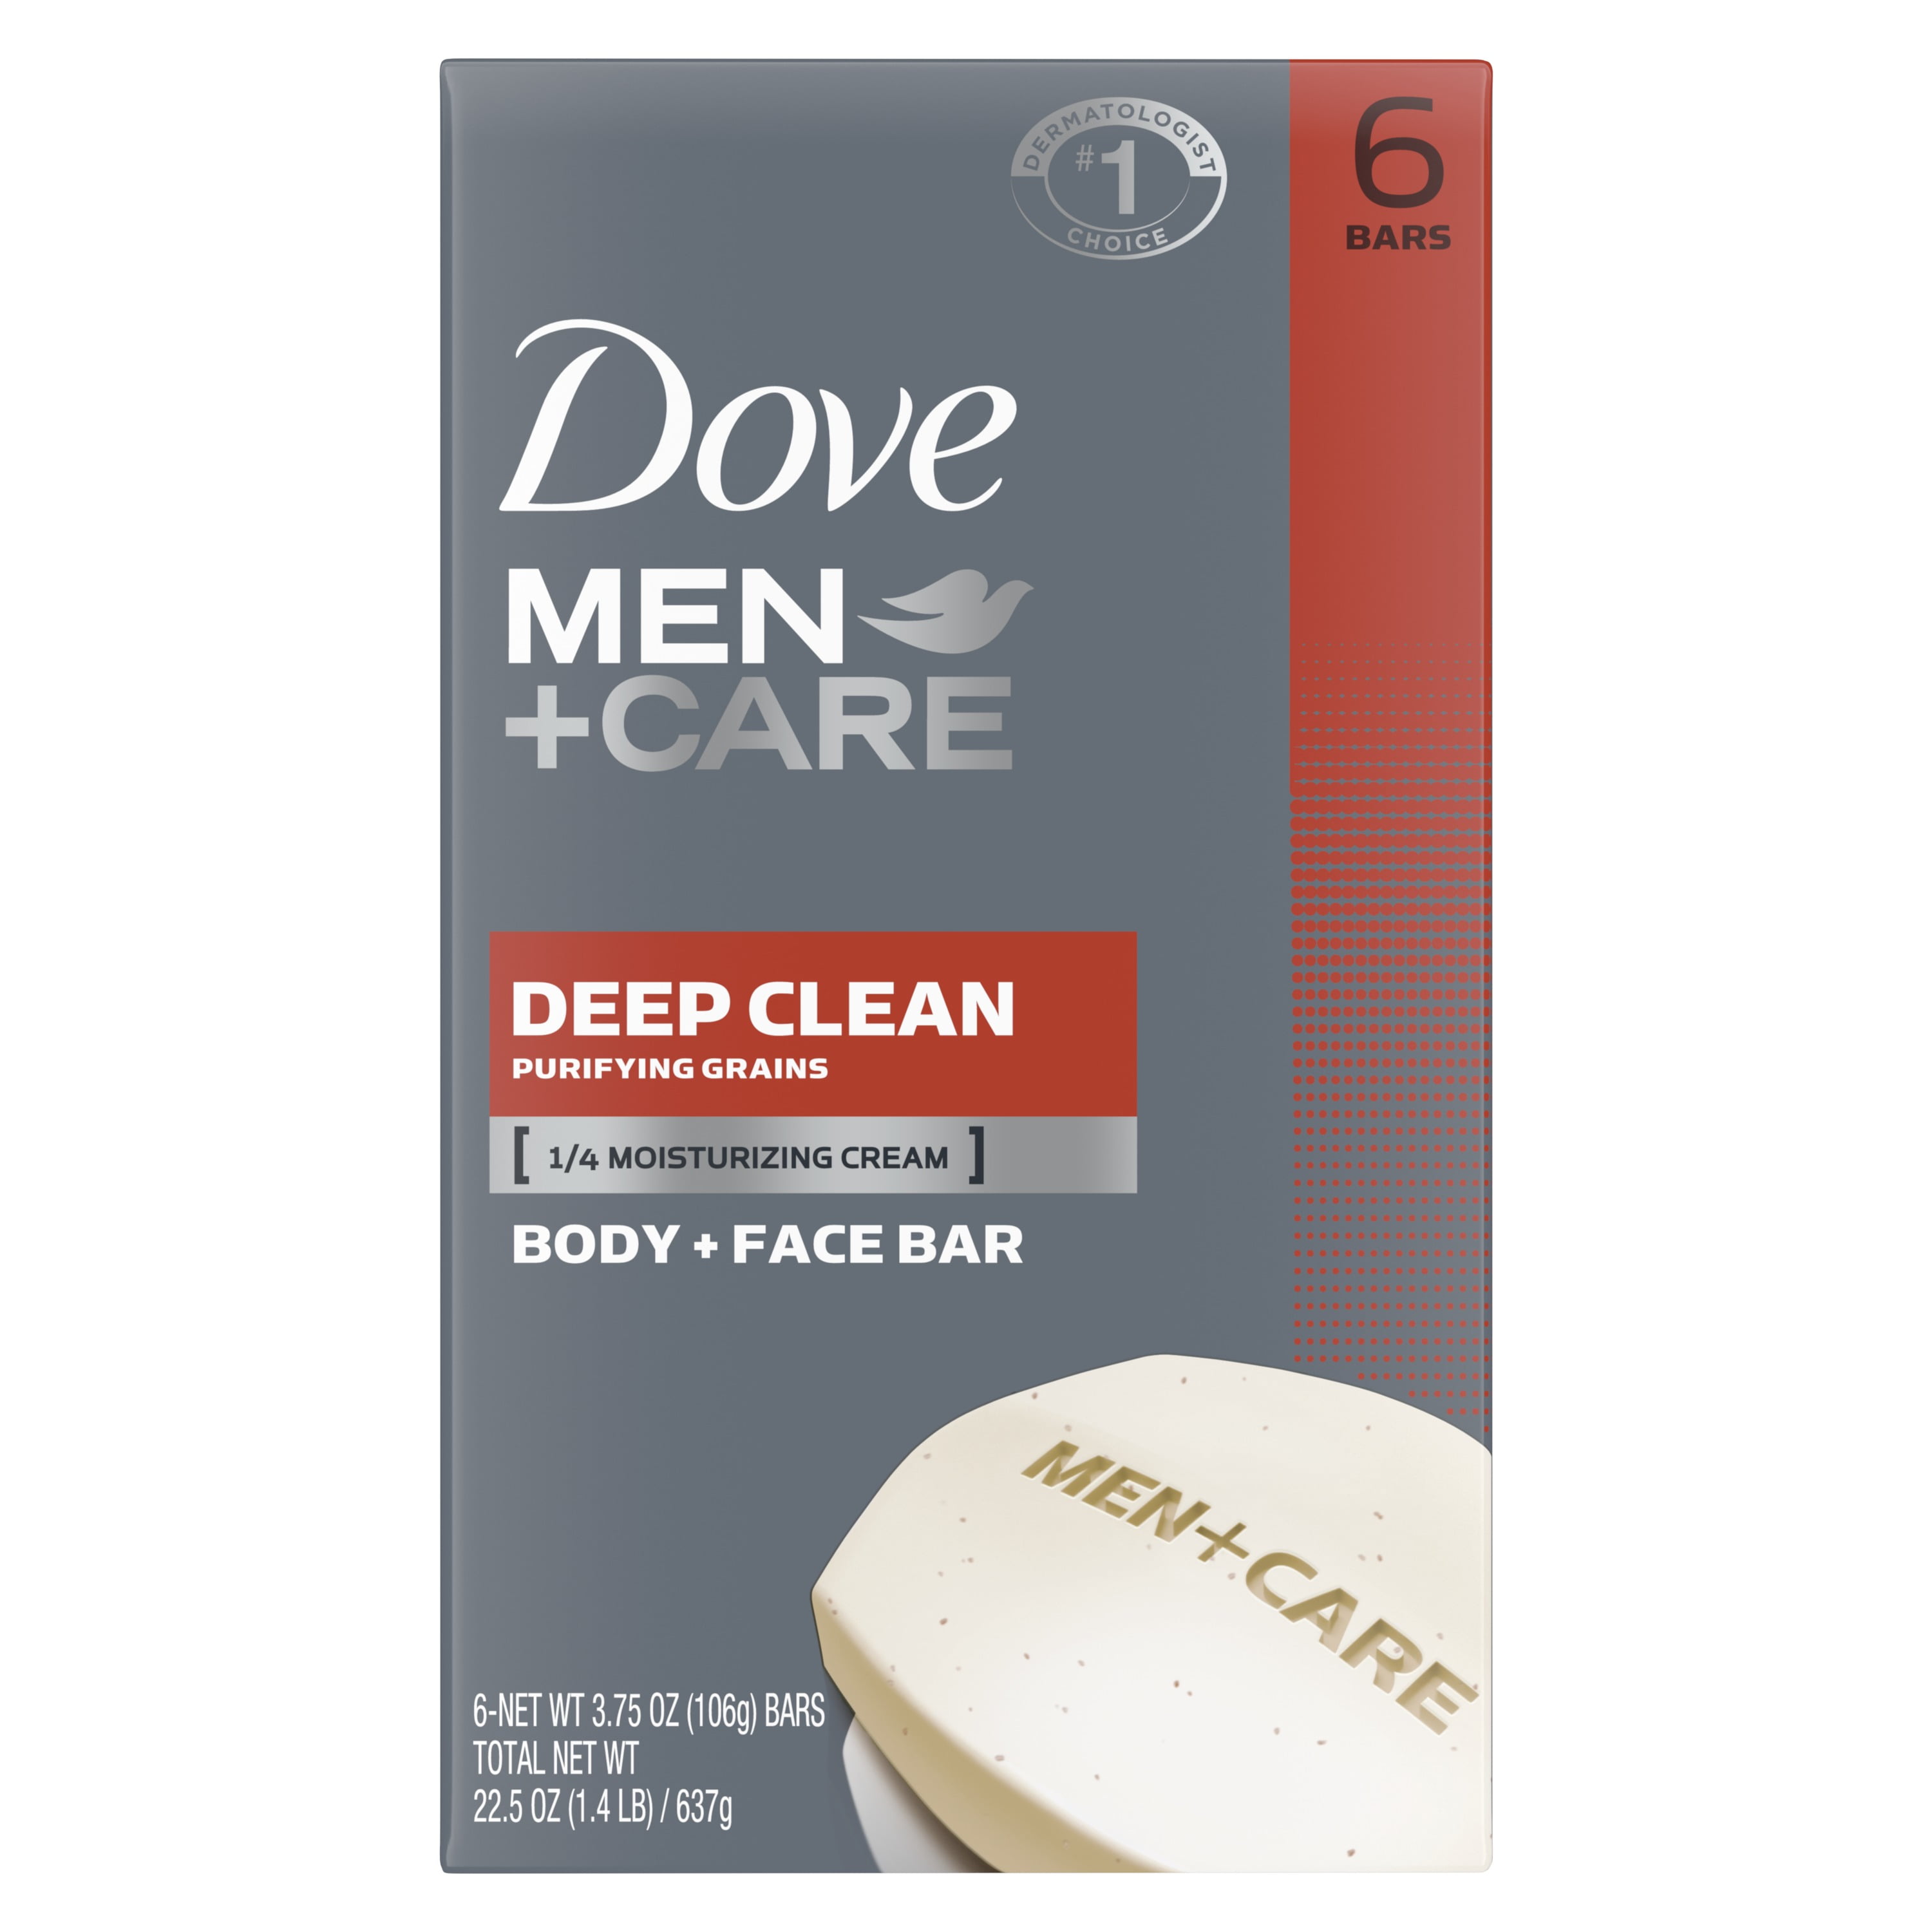 Dove Men+Care Men's Bar Soap More Moisturizing Than Bar Soap Deep Clean  Soap Bar that Effectively Wa…See more Dove Men+Care Men's Bar Soap More